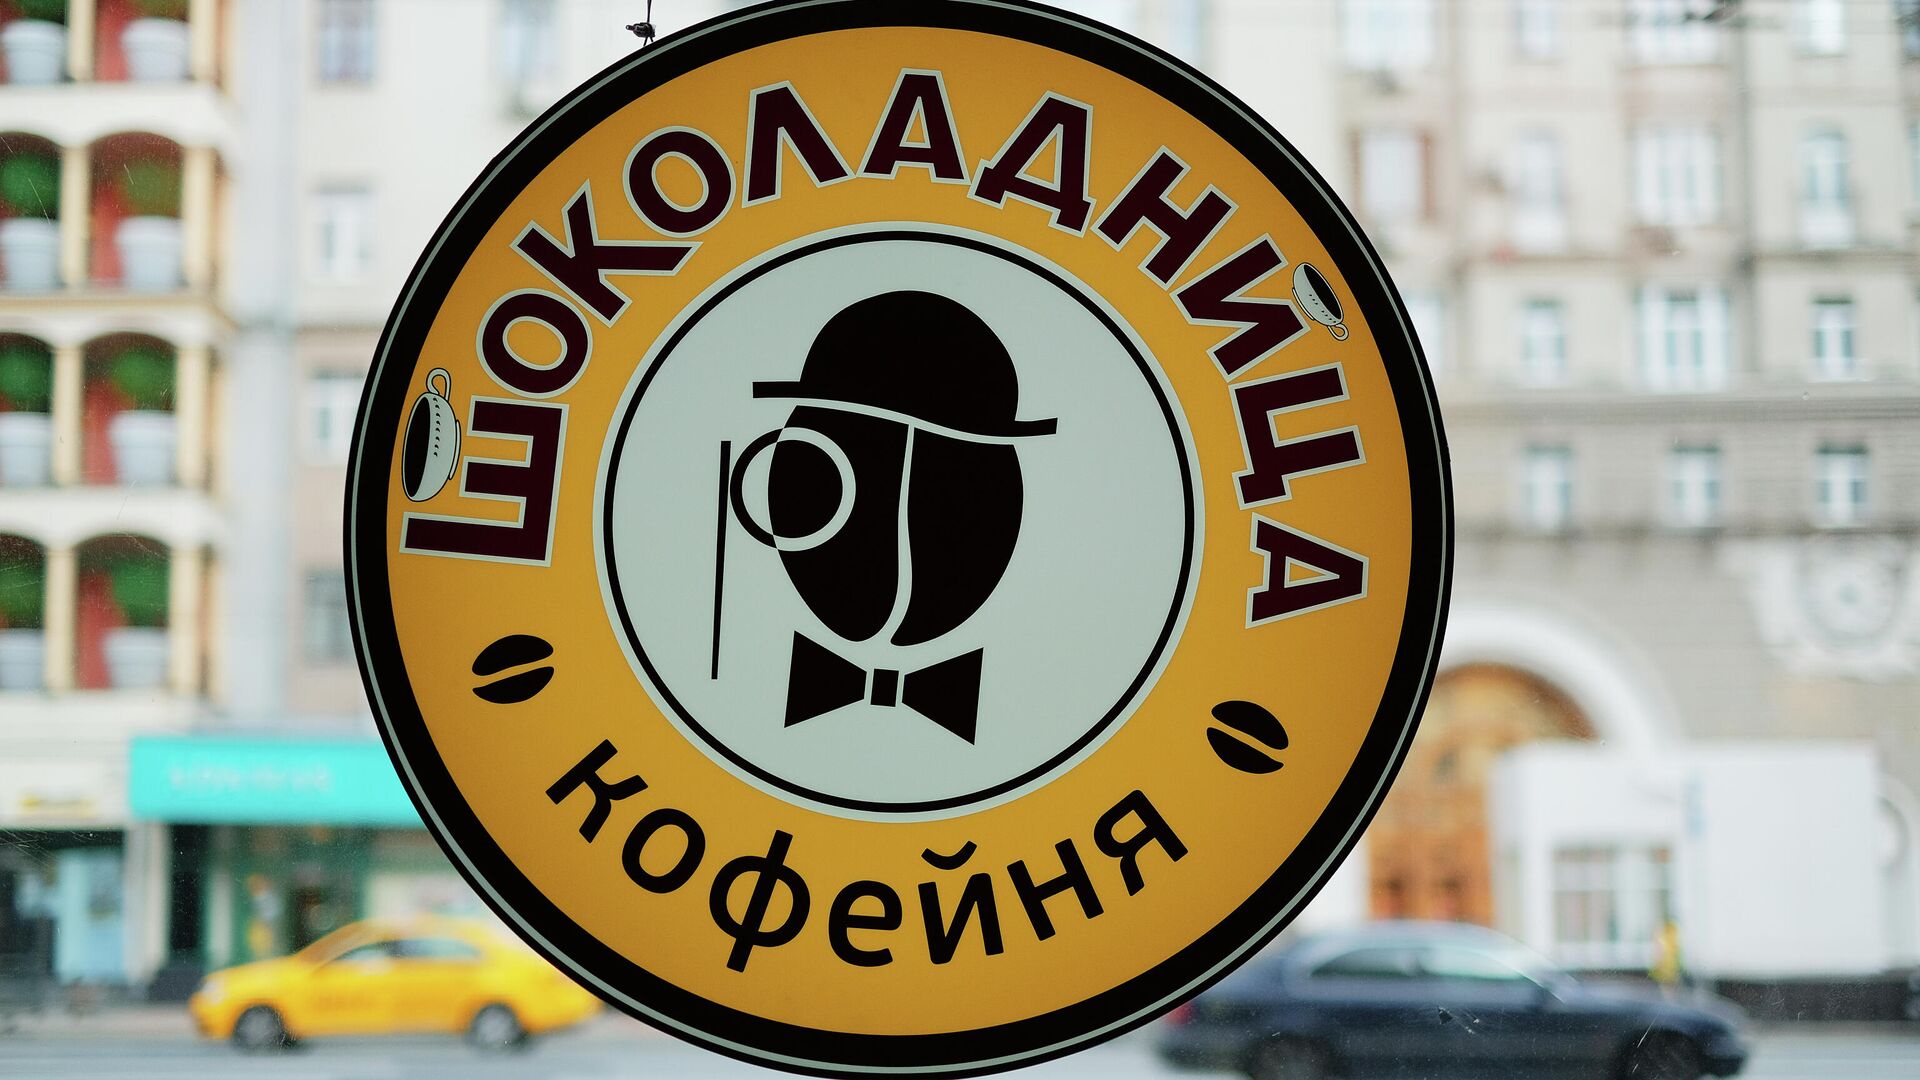 В Москве выявили нарушения мер по COVID-19 в 12 кафе "Шоколадница"